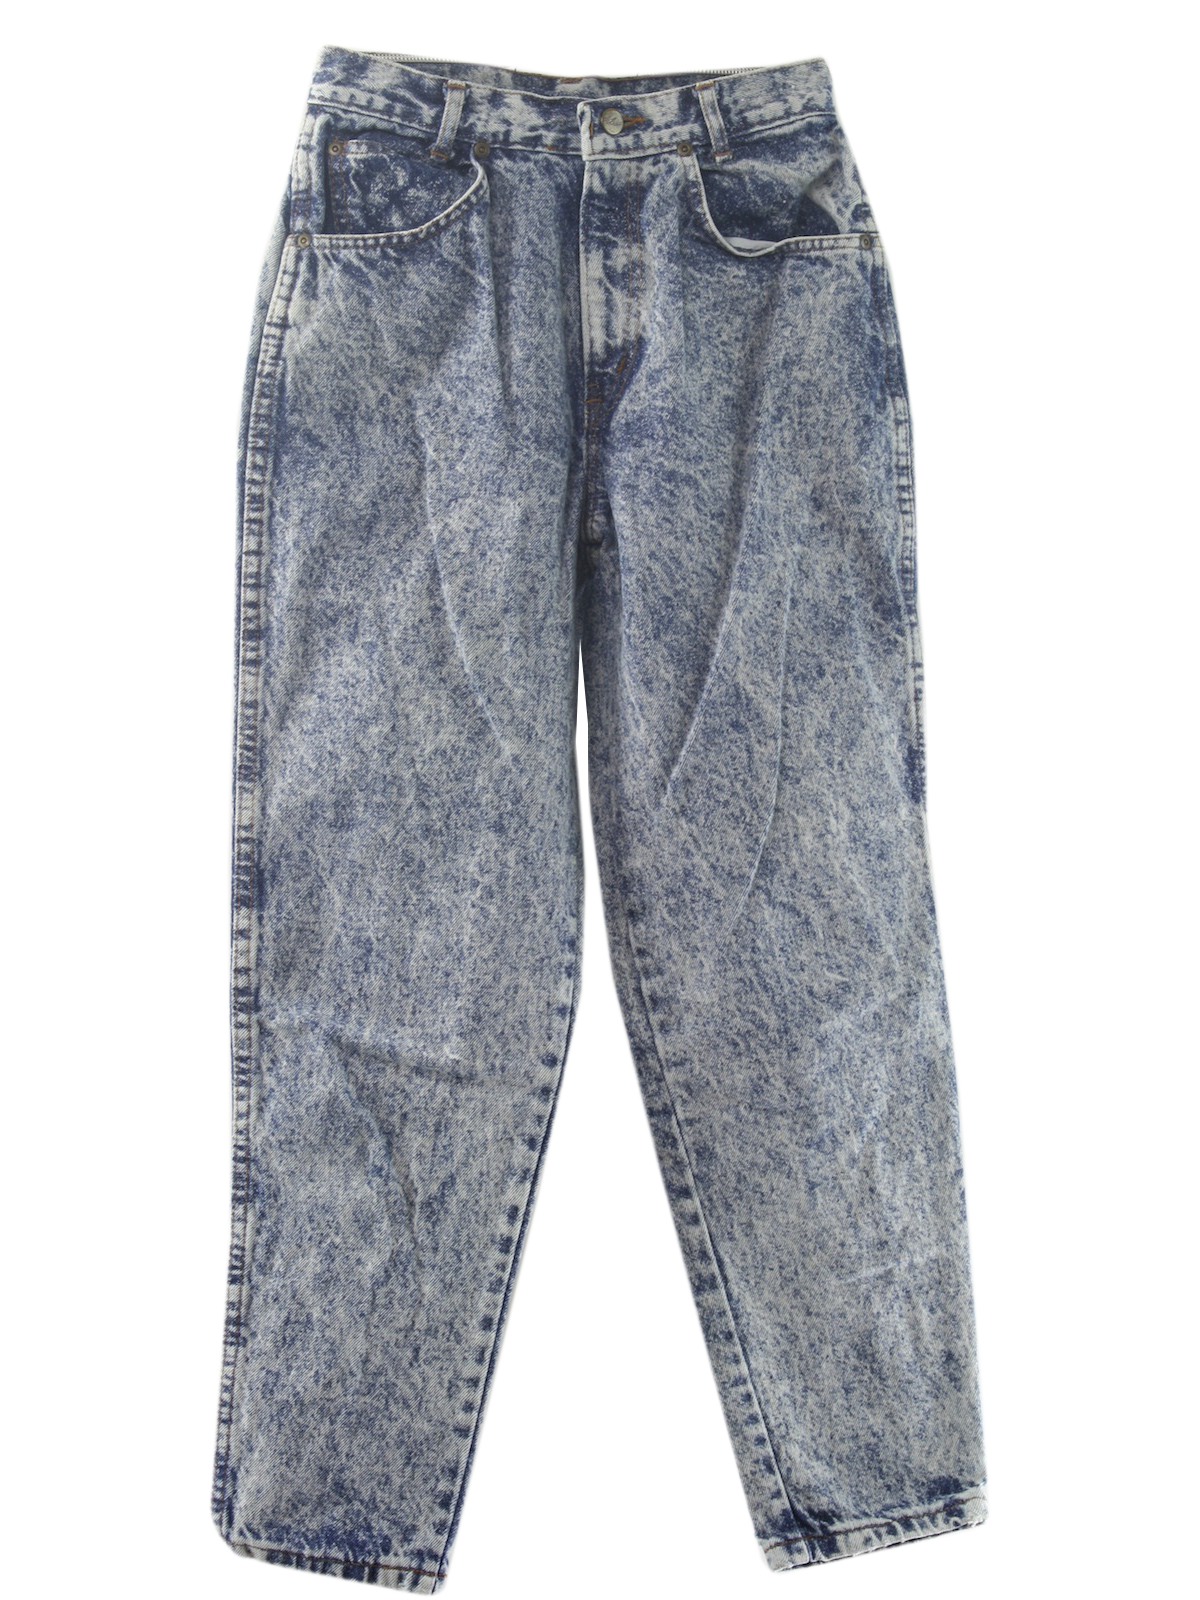 Retro 1980s Pants: 80s -Chic- Womens dark blue background, acid washed ...